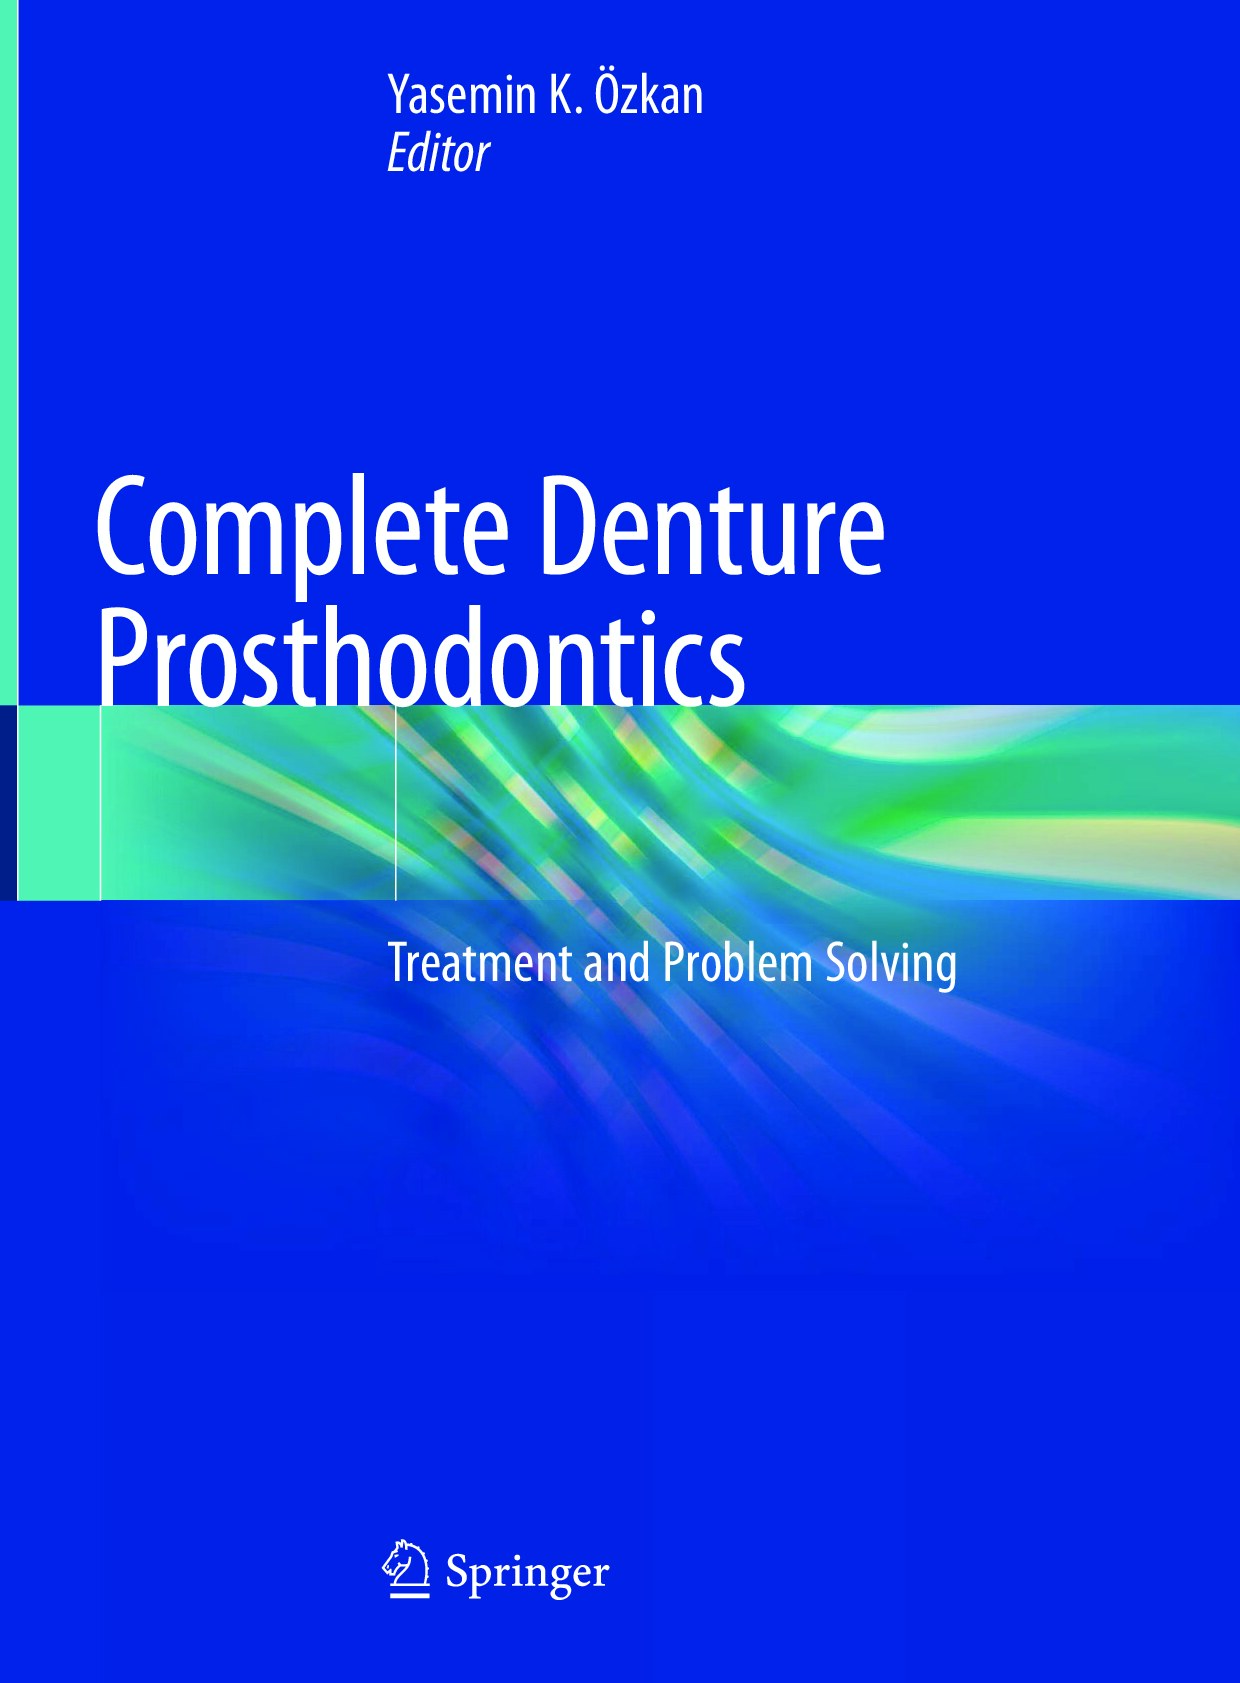 Complete Denture Prosthodontics_ Treatment and Problem Solving 2018